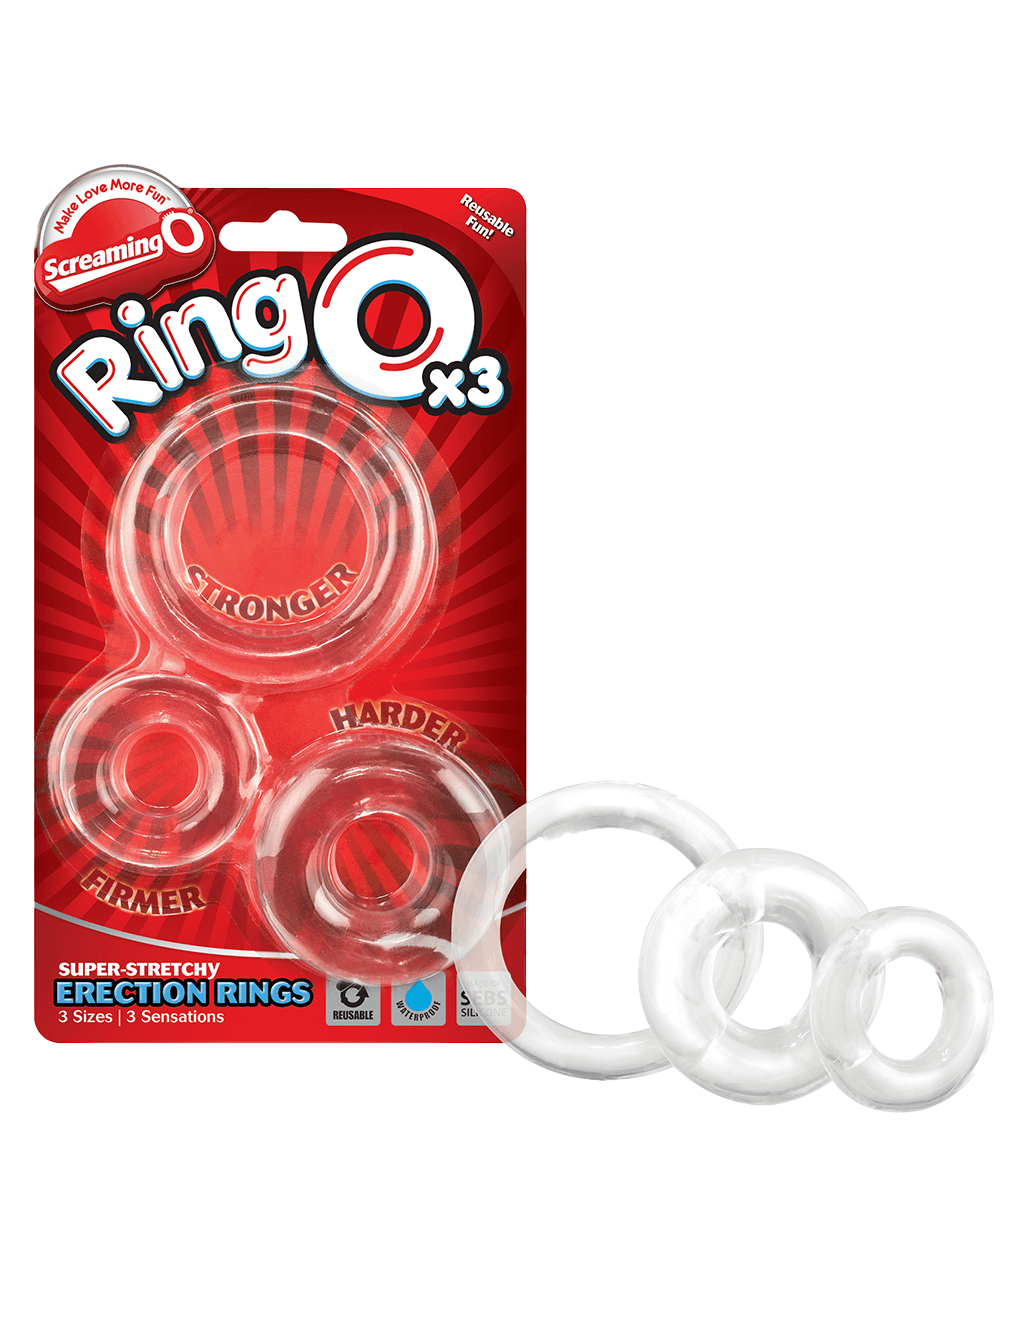 Screaming O Ring O x3 - Clear - Packaging